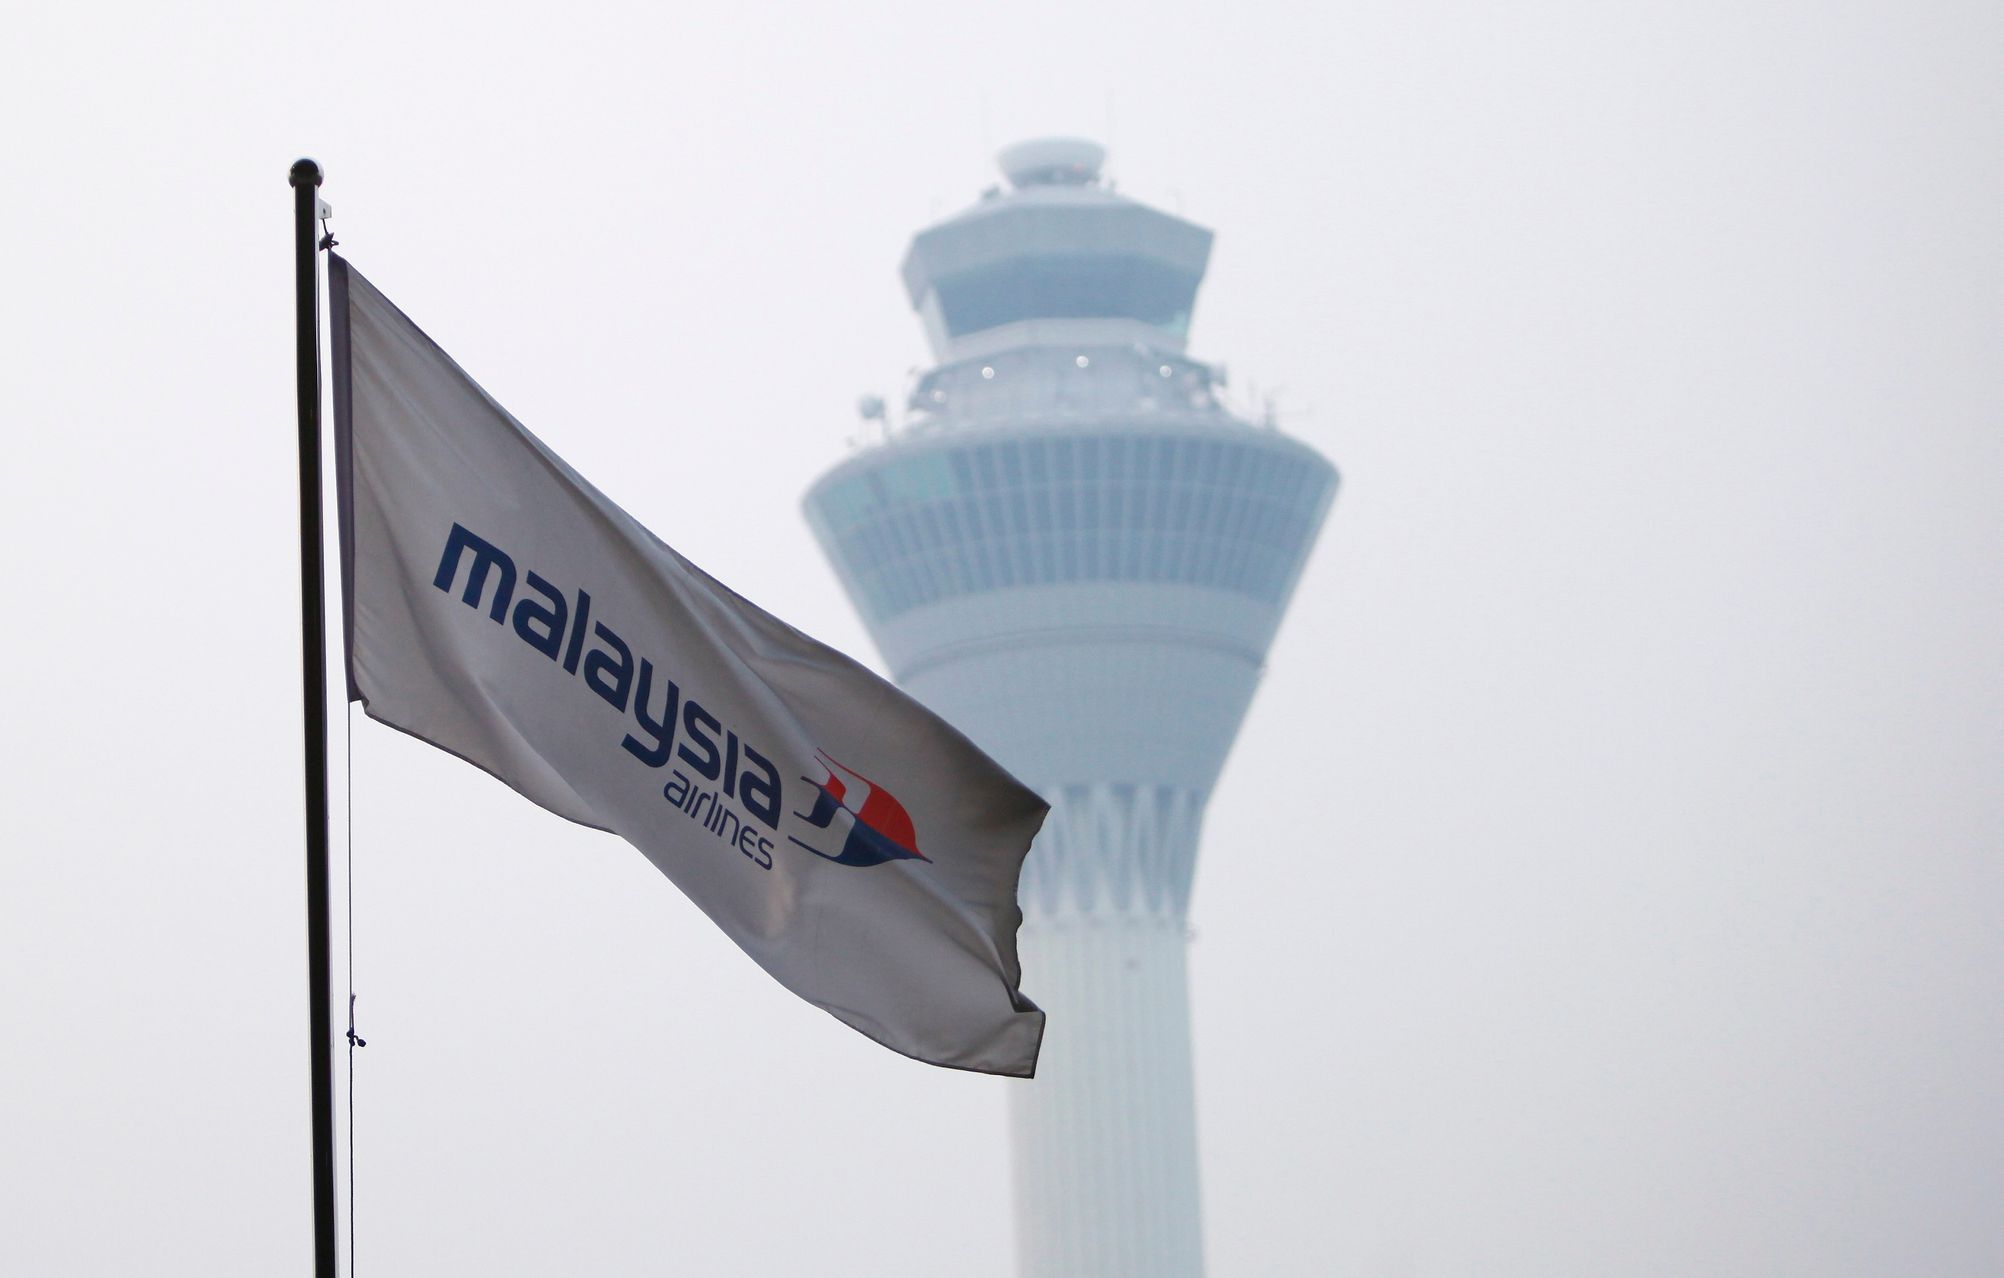 Vlajka Malaysia Airlines